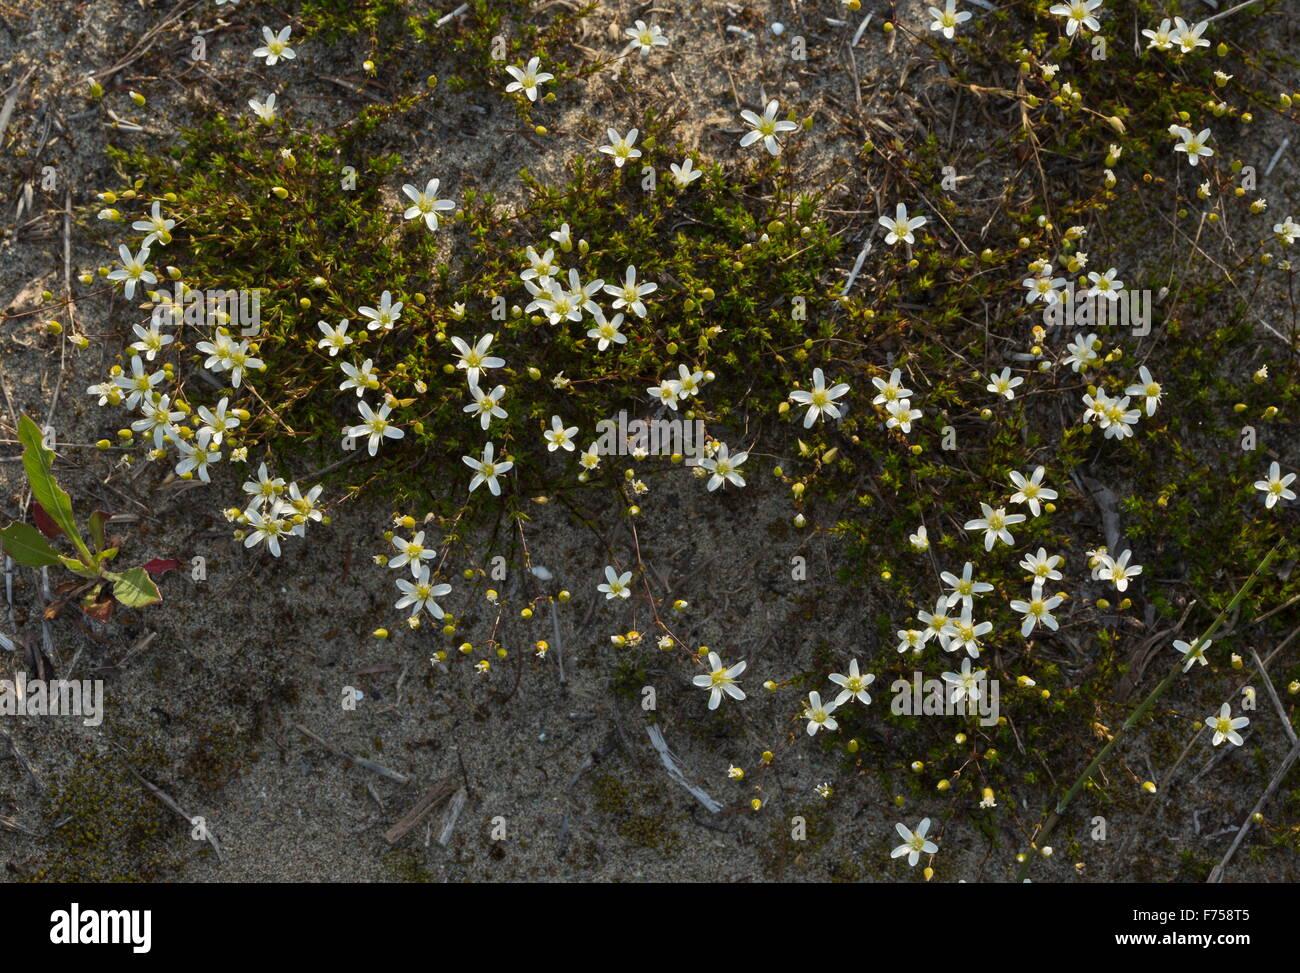 michauxs-stitchwort-rock-sandwort-minuartia-michauxii-in-flower-on-F758T5.jpg